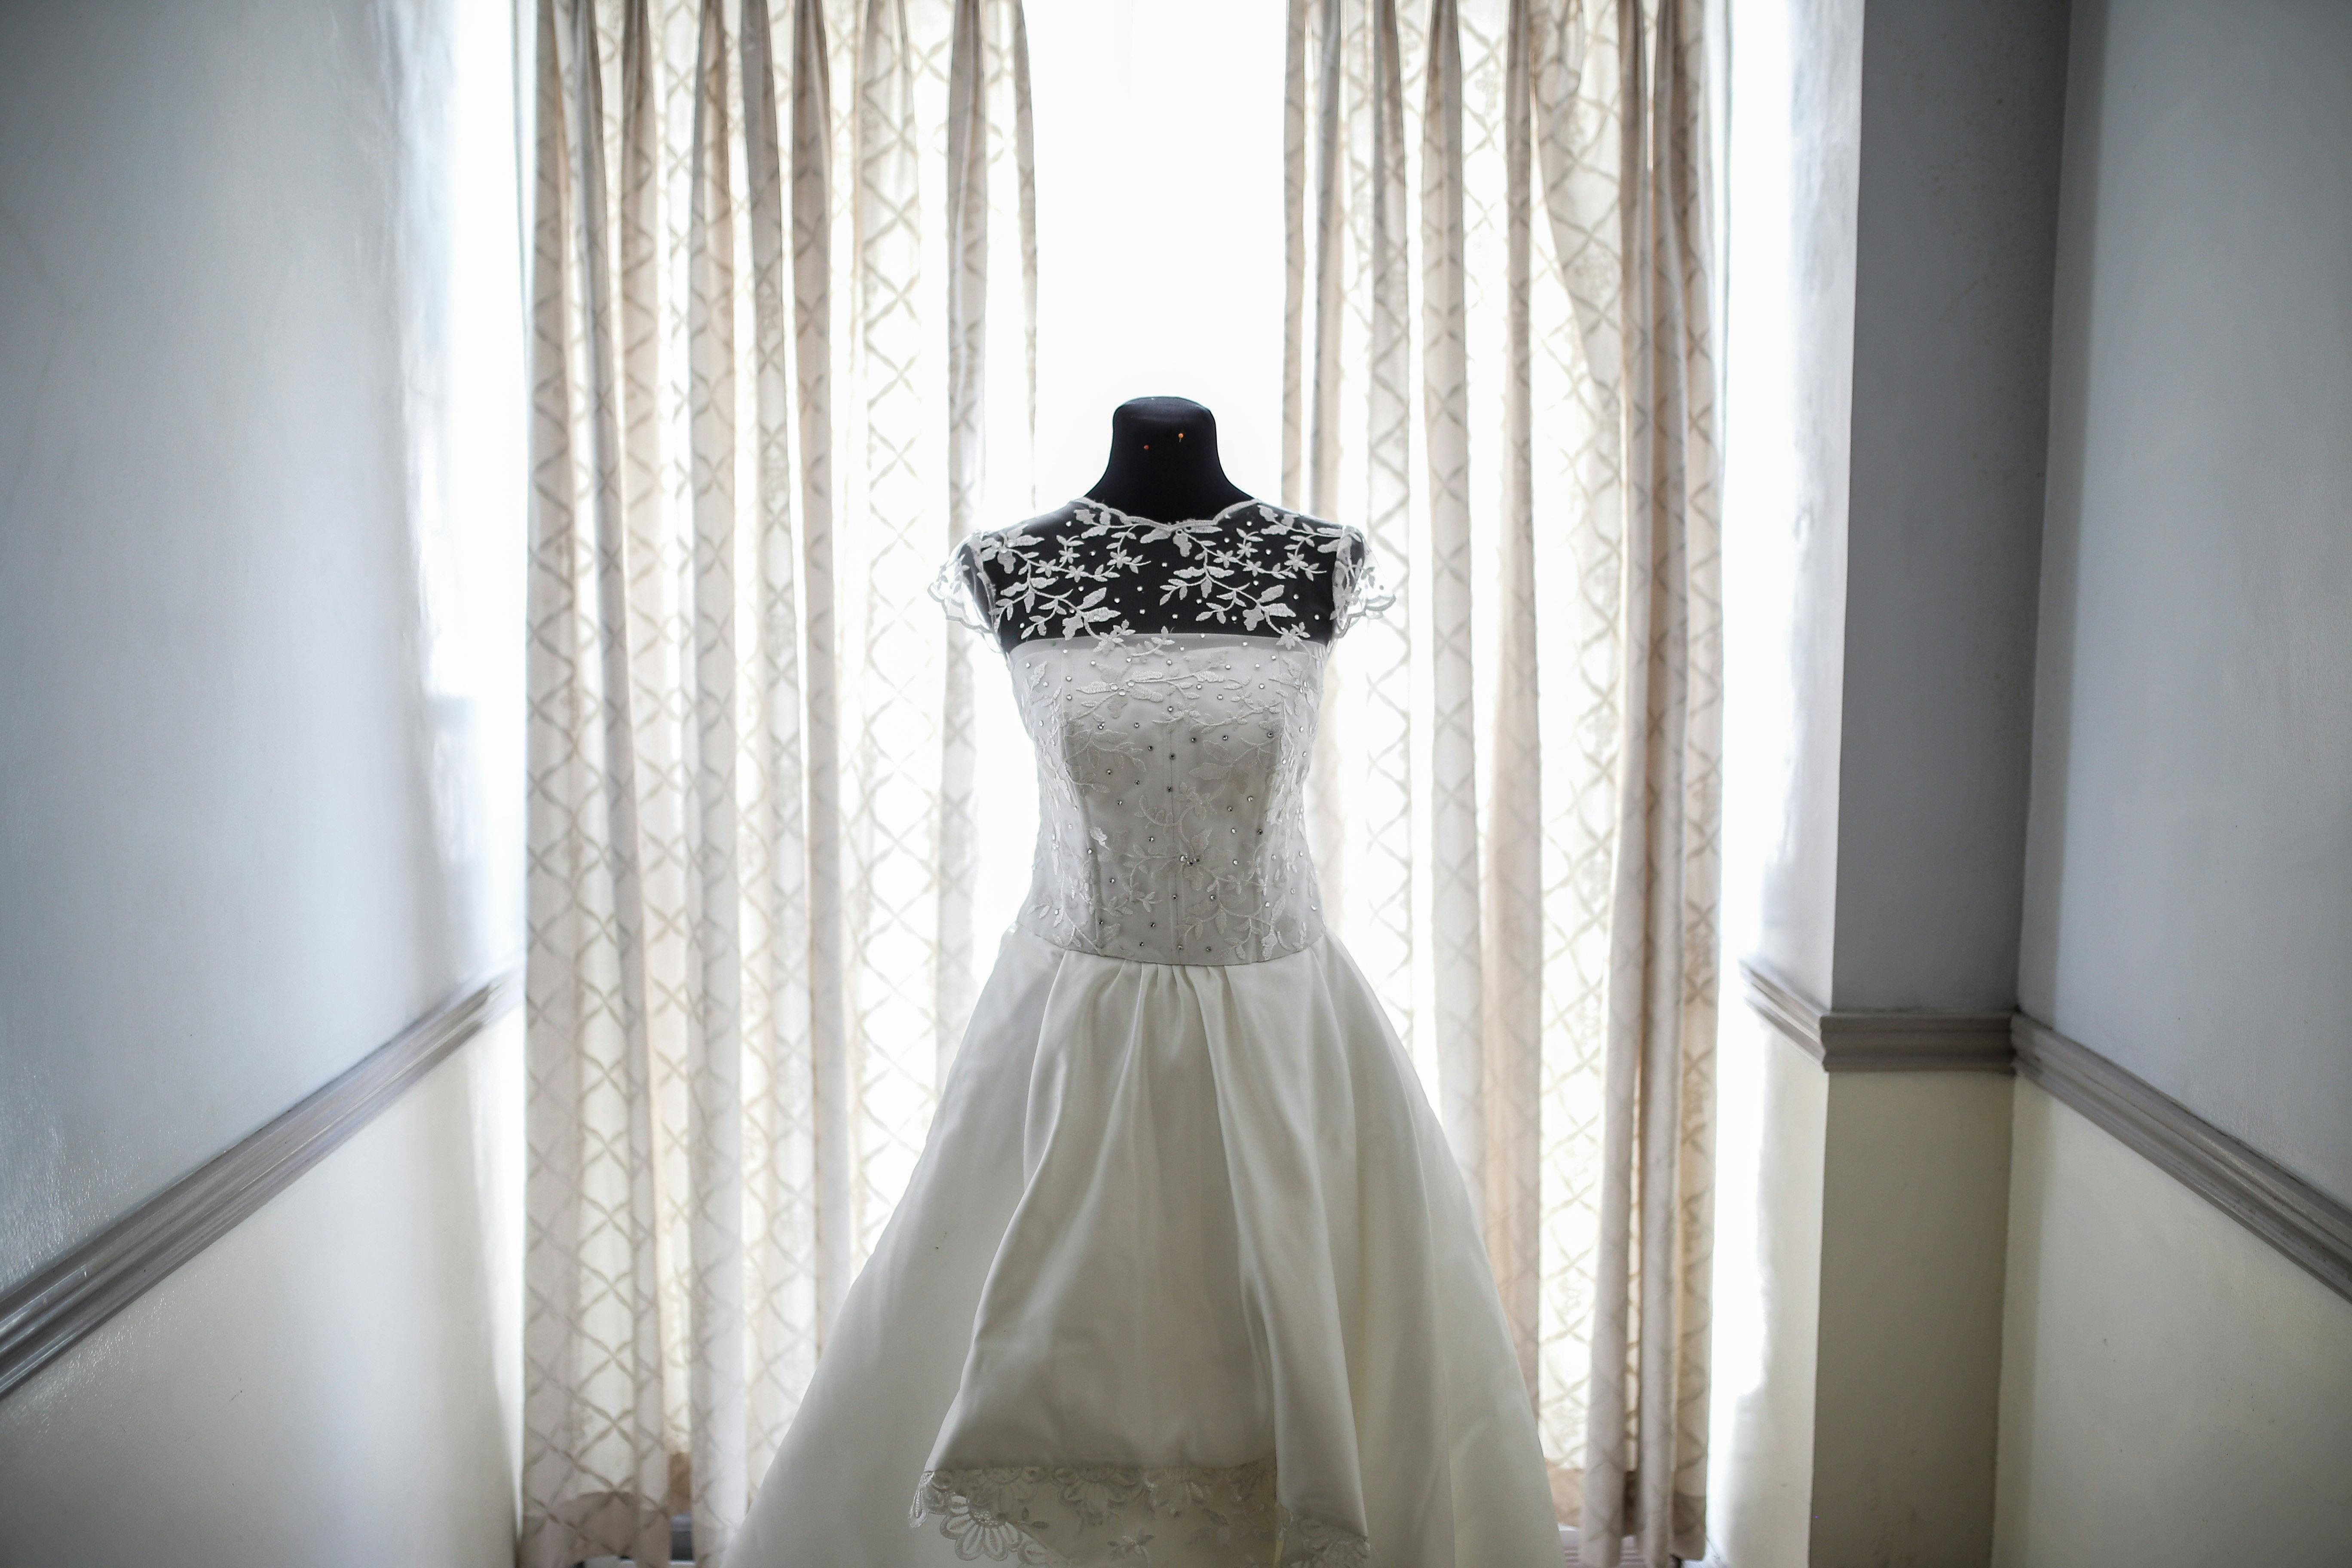 Wedding dress | Source: Pexels